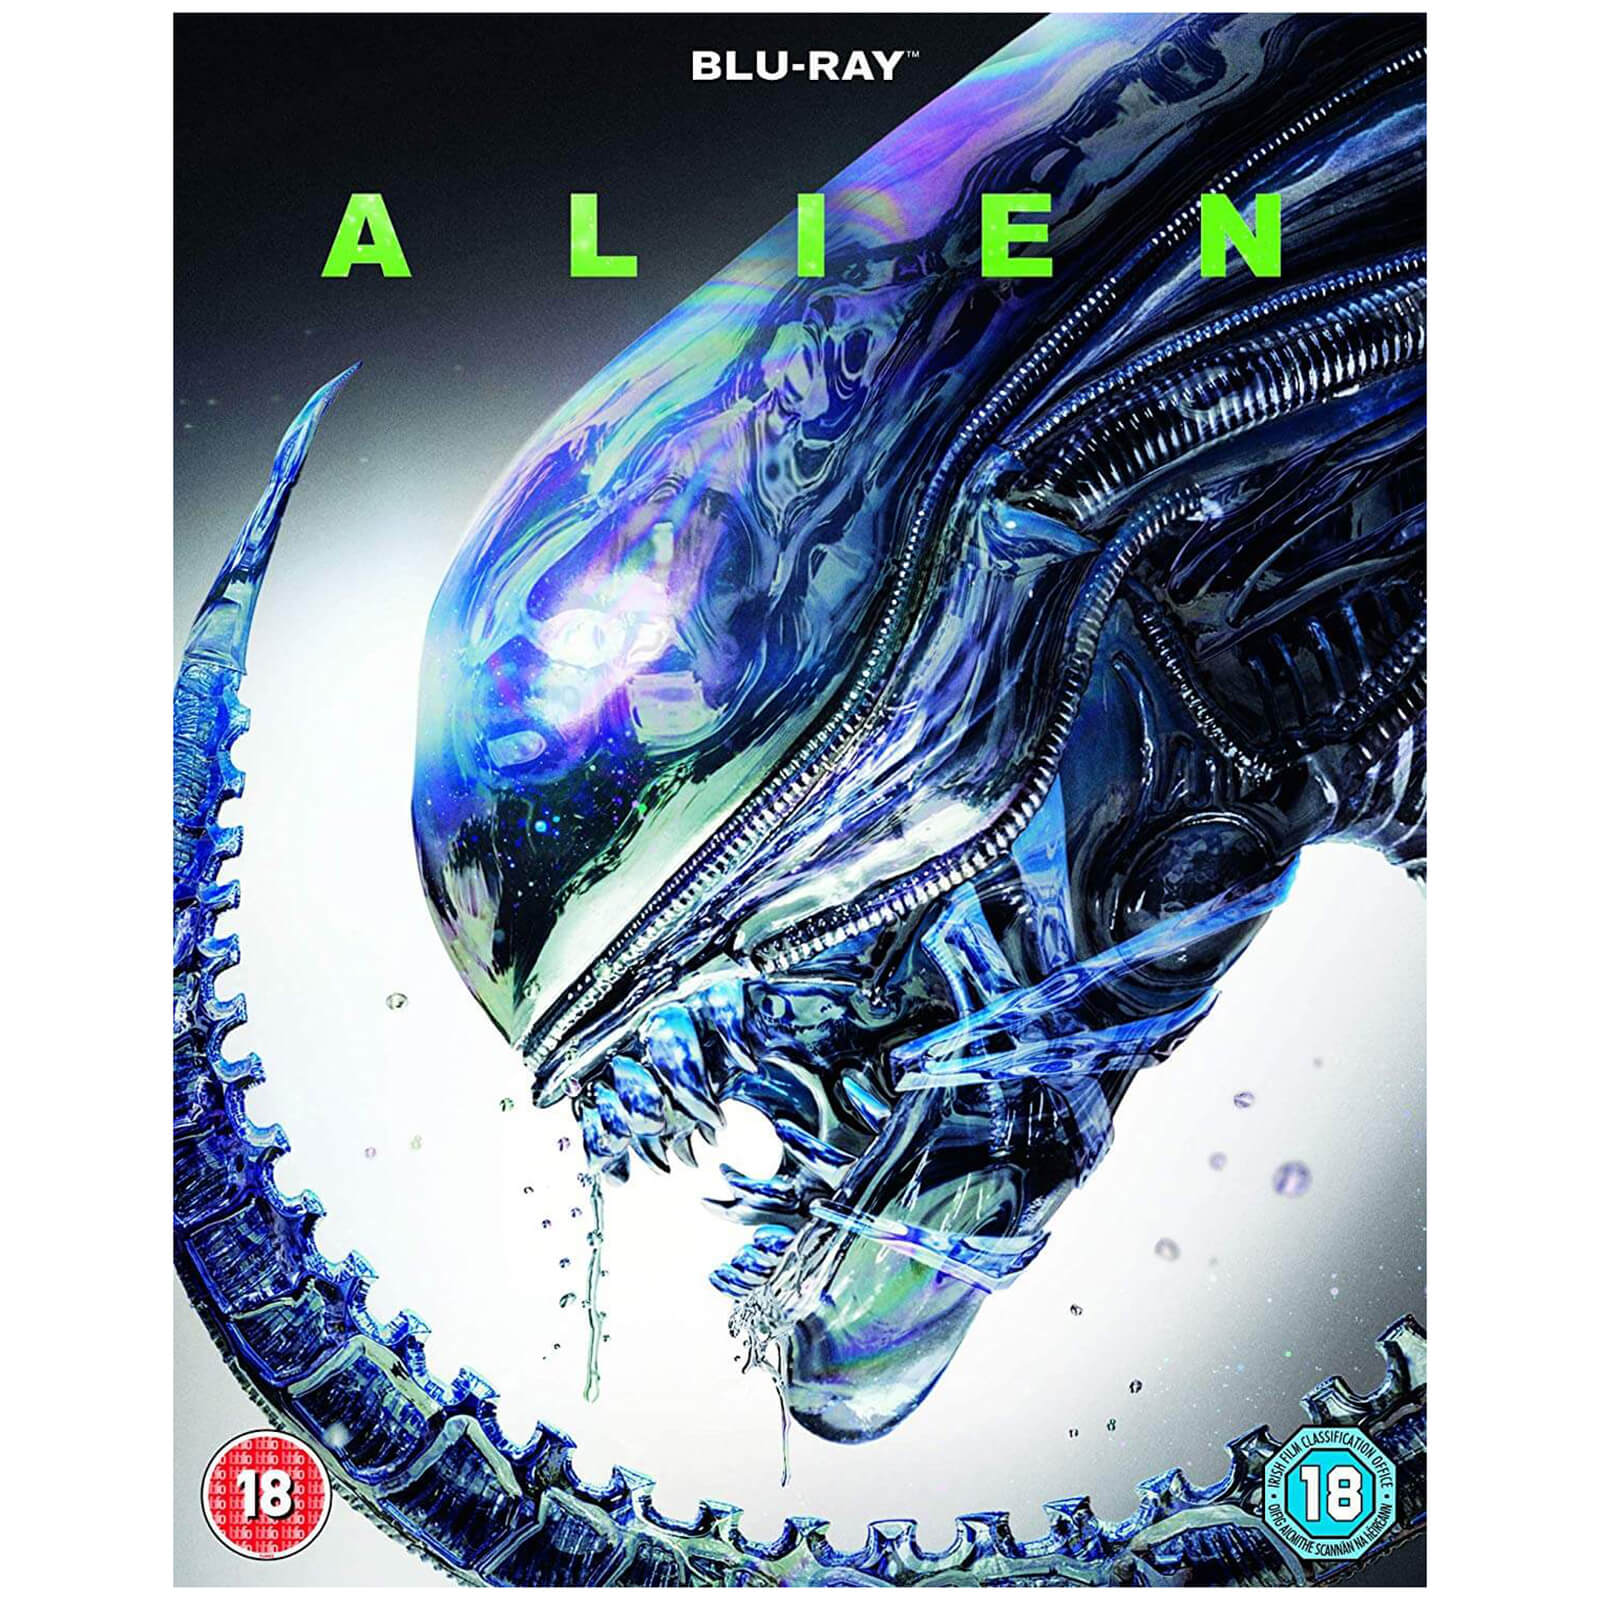 Alien 40e anniversaire